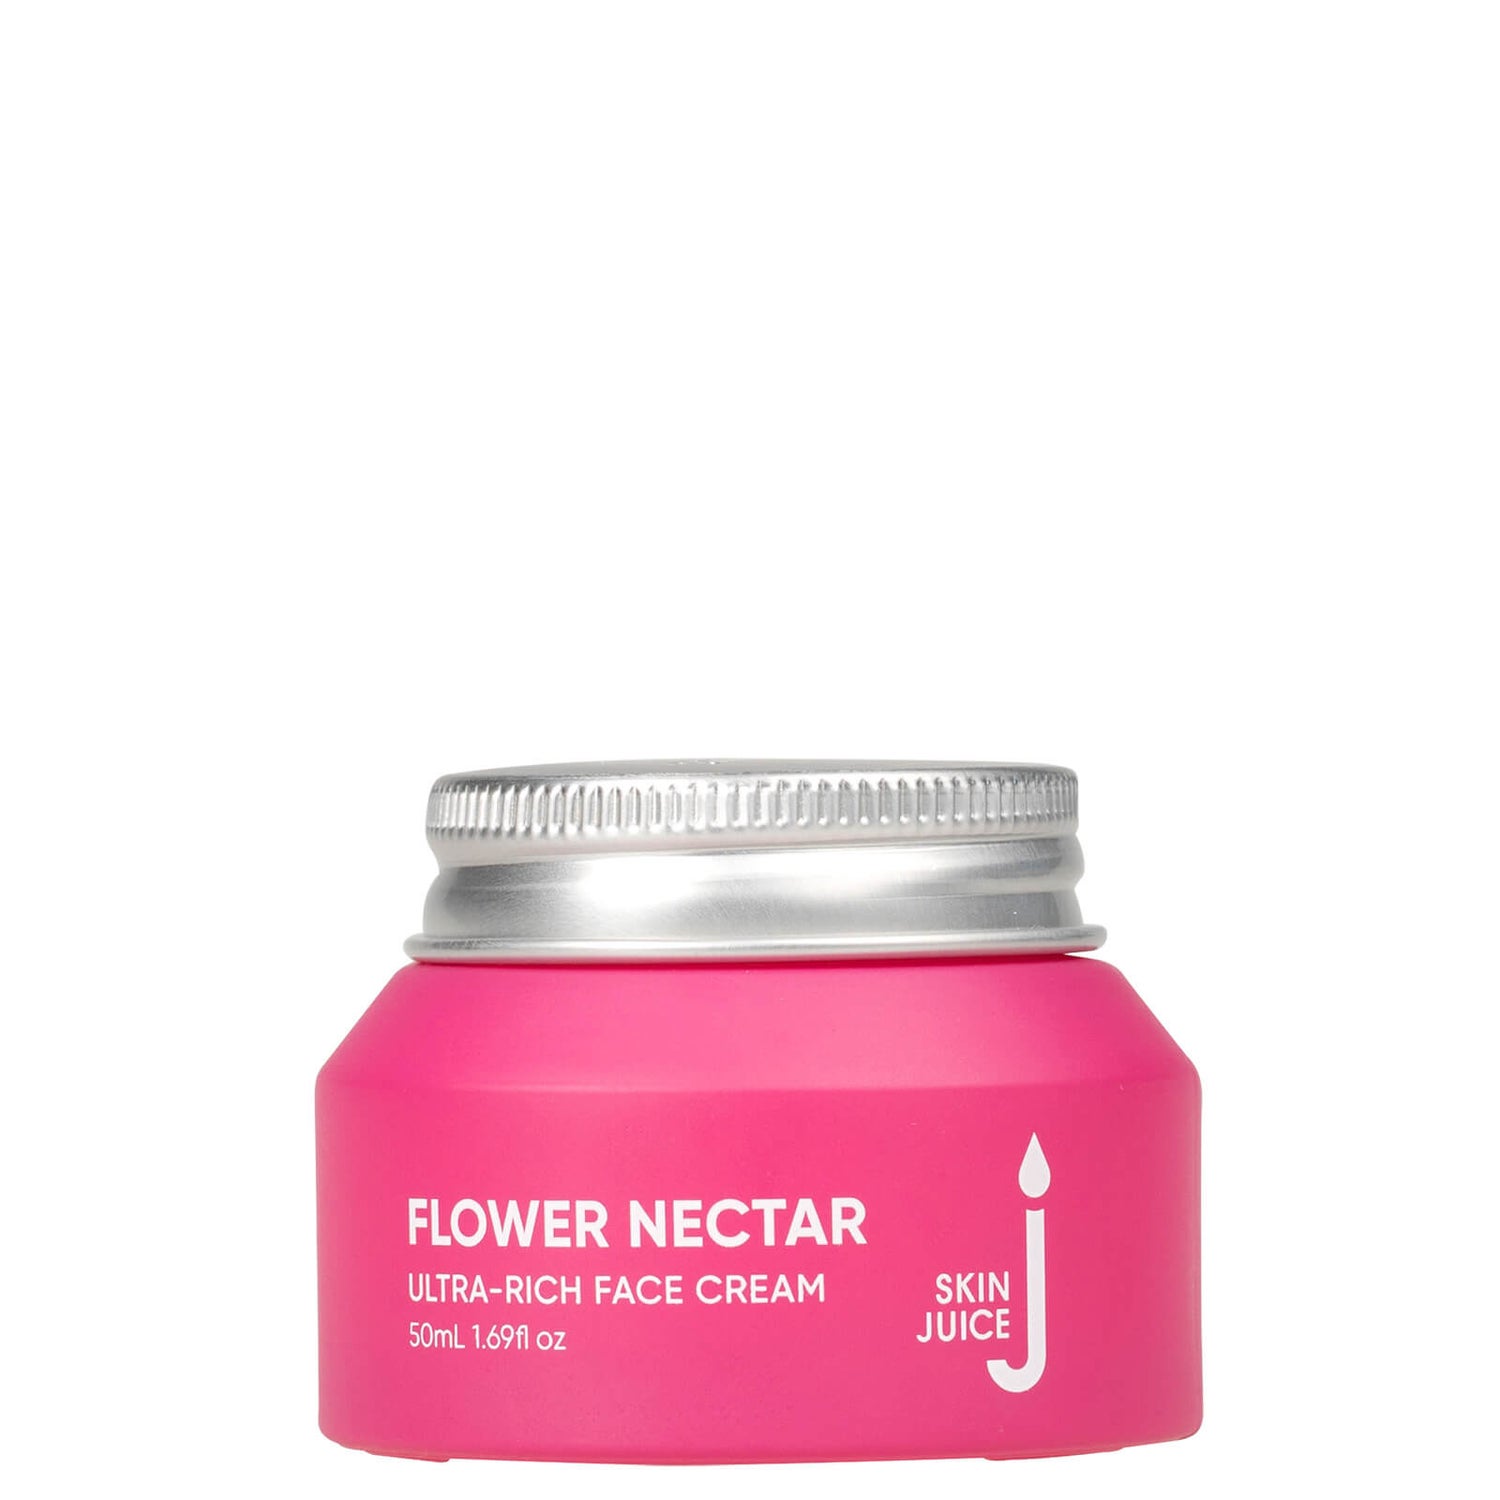 Skin Juice Flower Nectar Ultra-Rich Face Cream 50ml